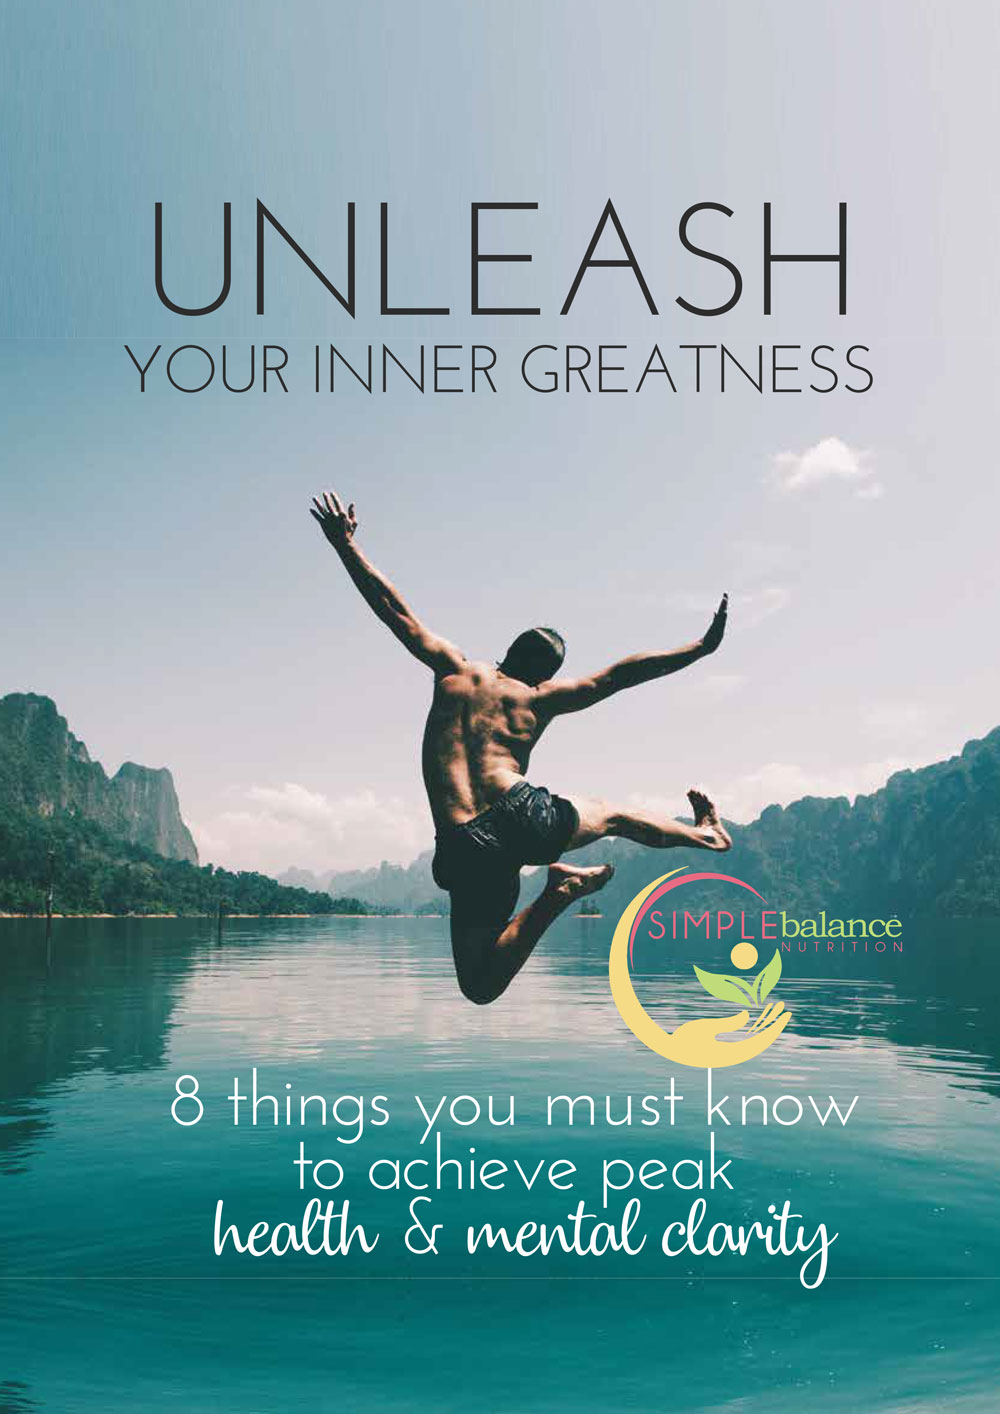 Unleash_your_inner_greatness-1